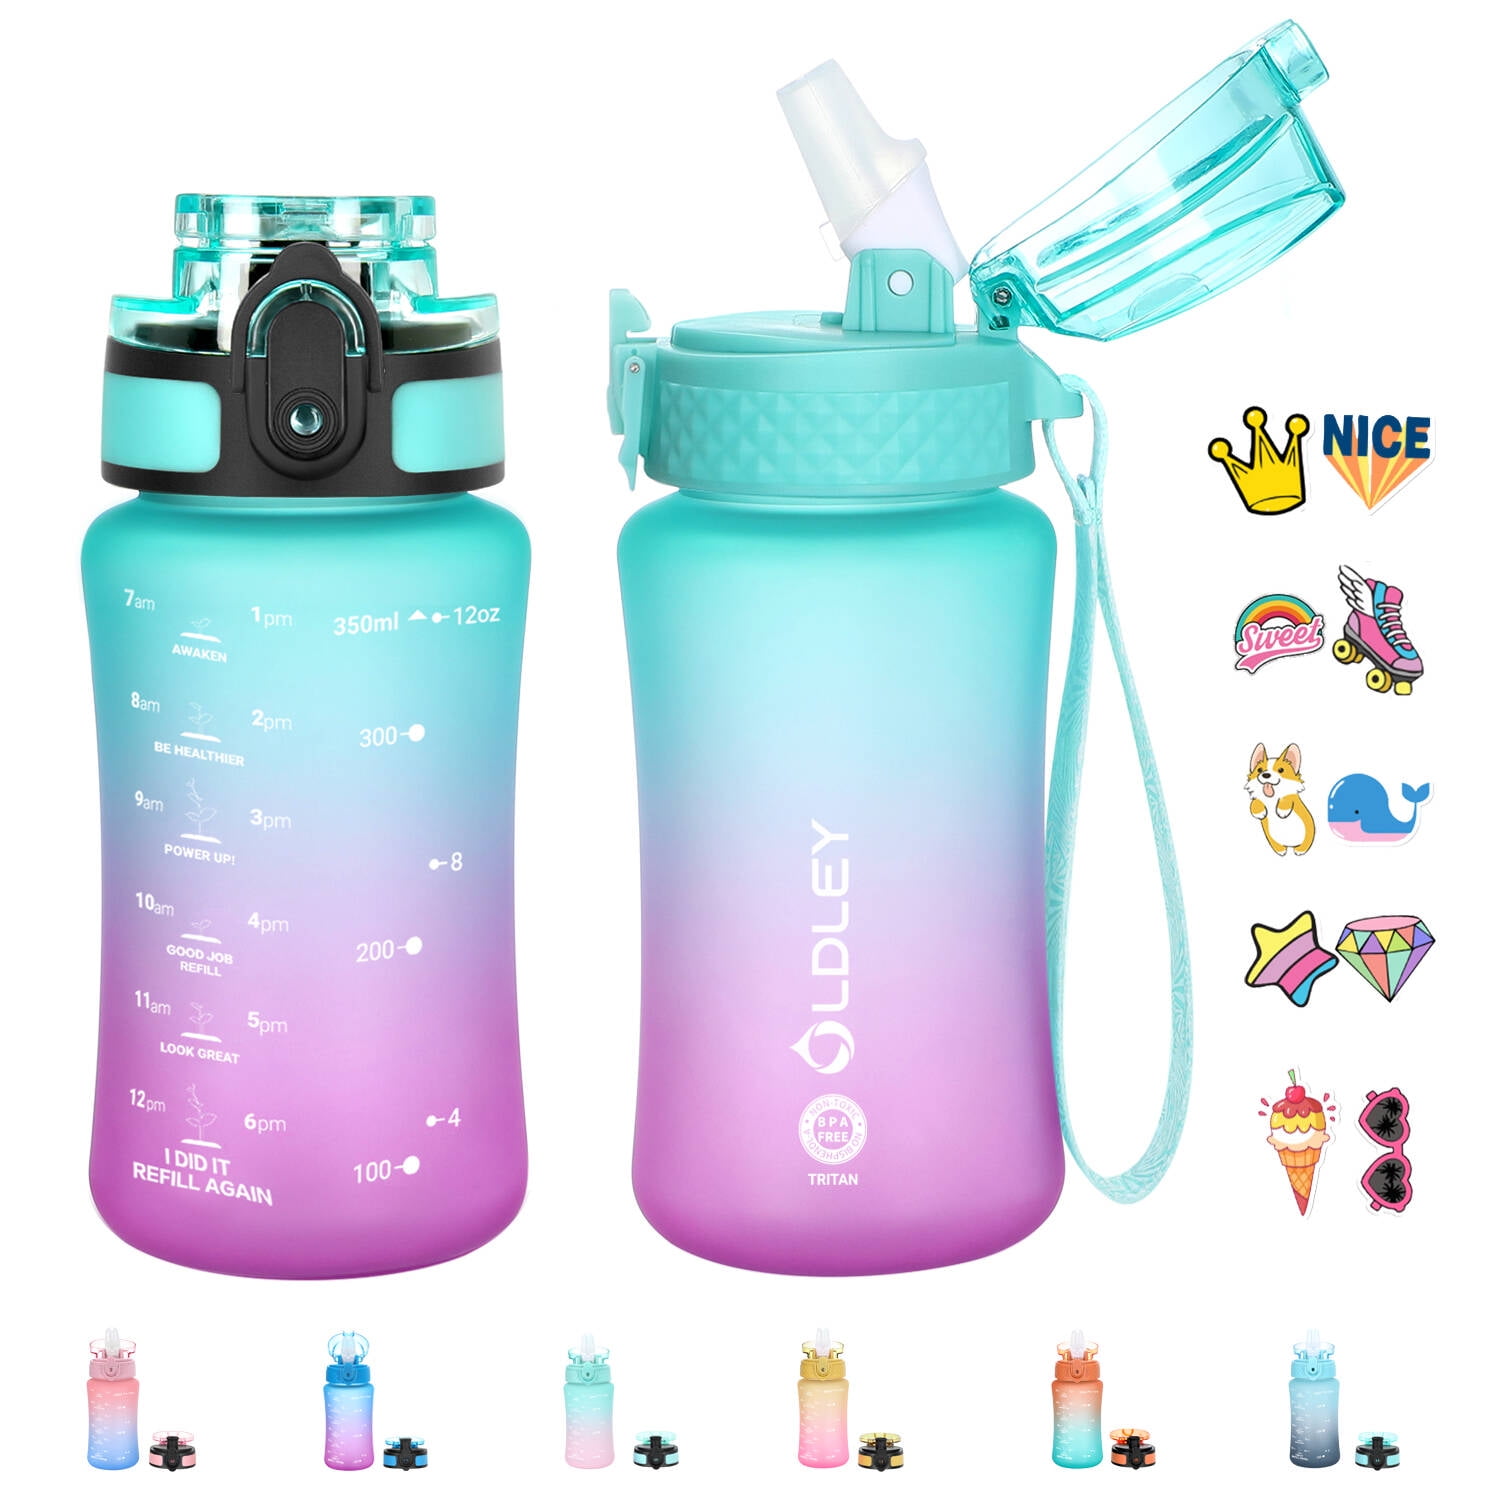 OLDLEY Kids Water Bottle for School with Straw Chug Lid, 15 oz Unbreakable  Leak-Proof BPA-Free Motiv…See more OLDLEY Kids Water Bottle for School with